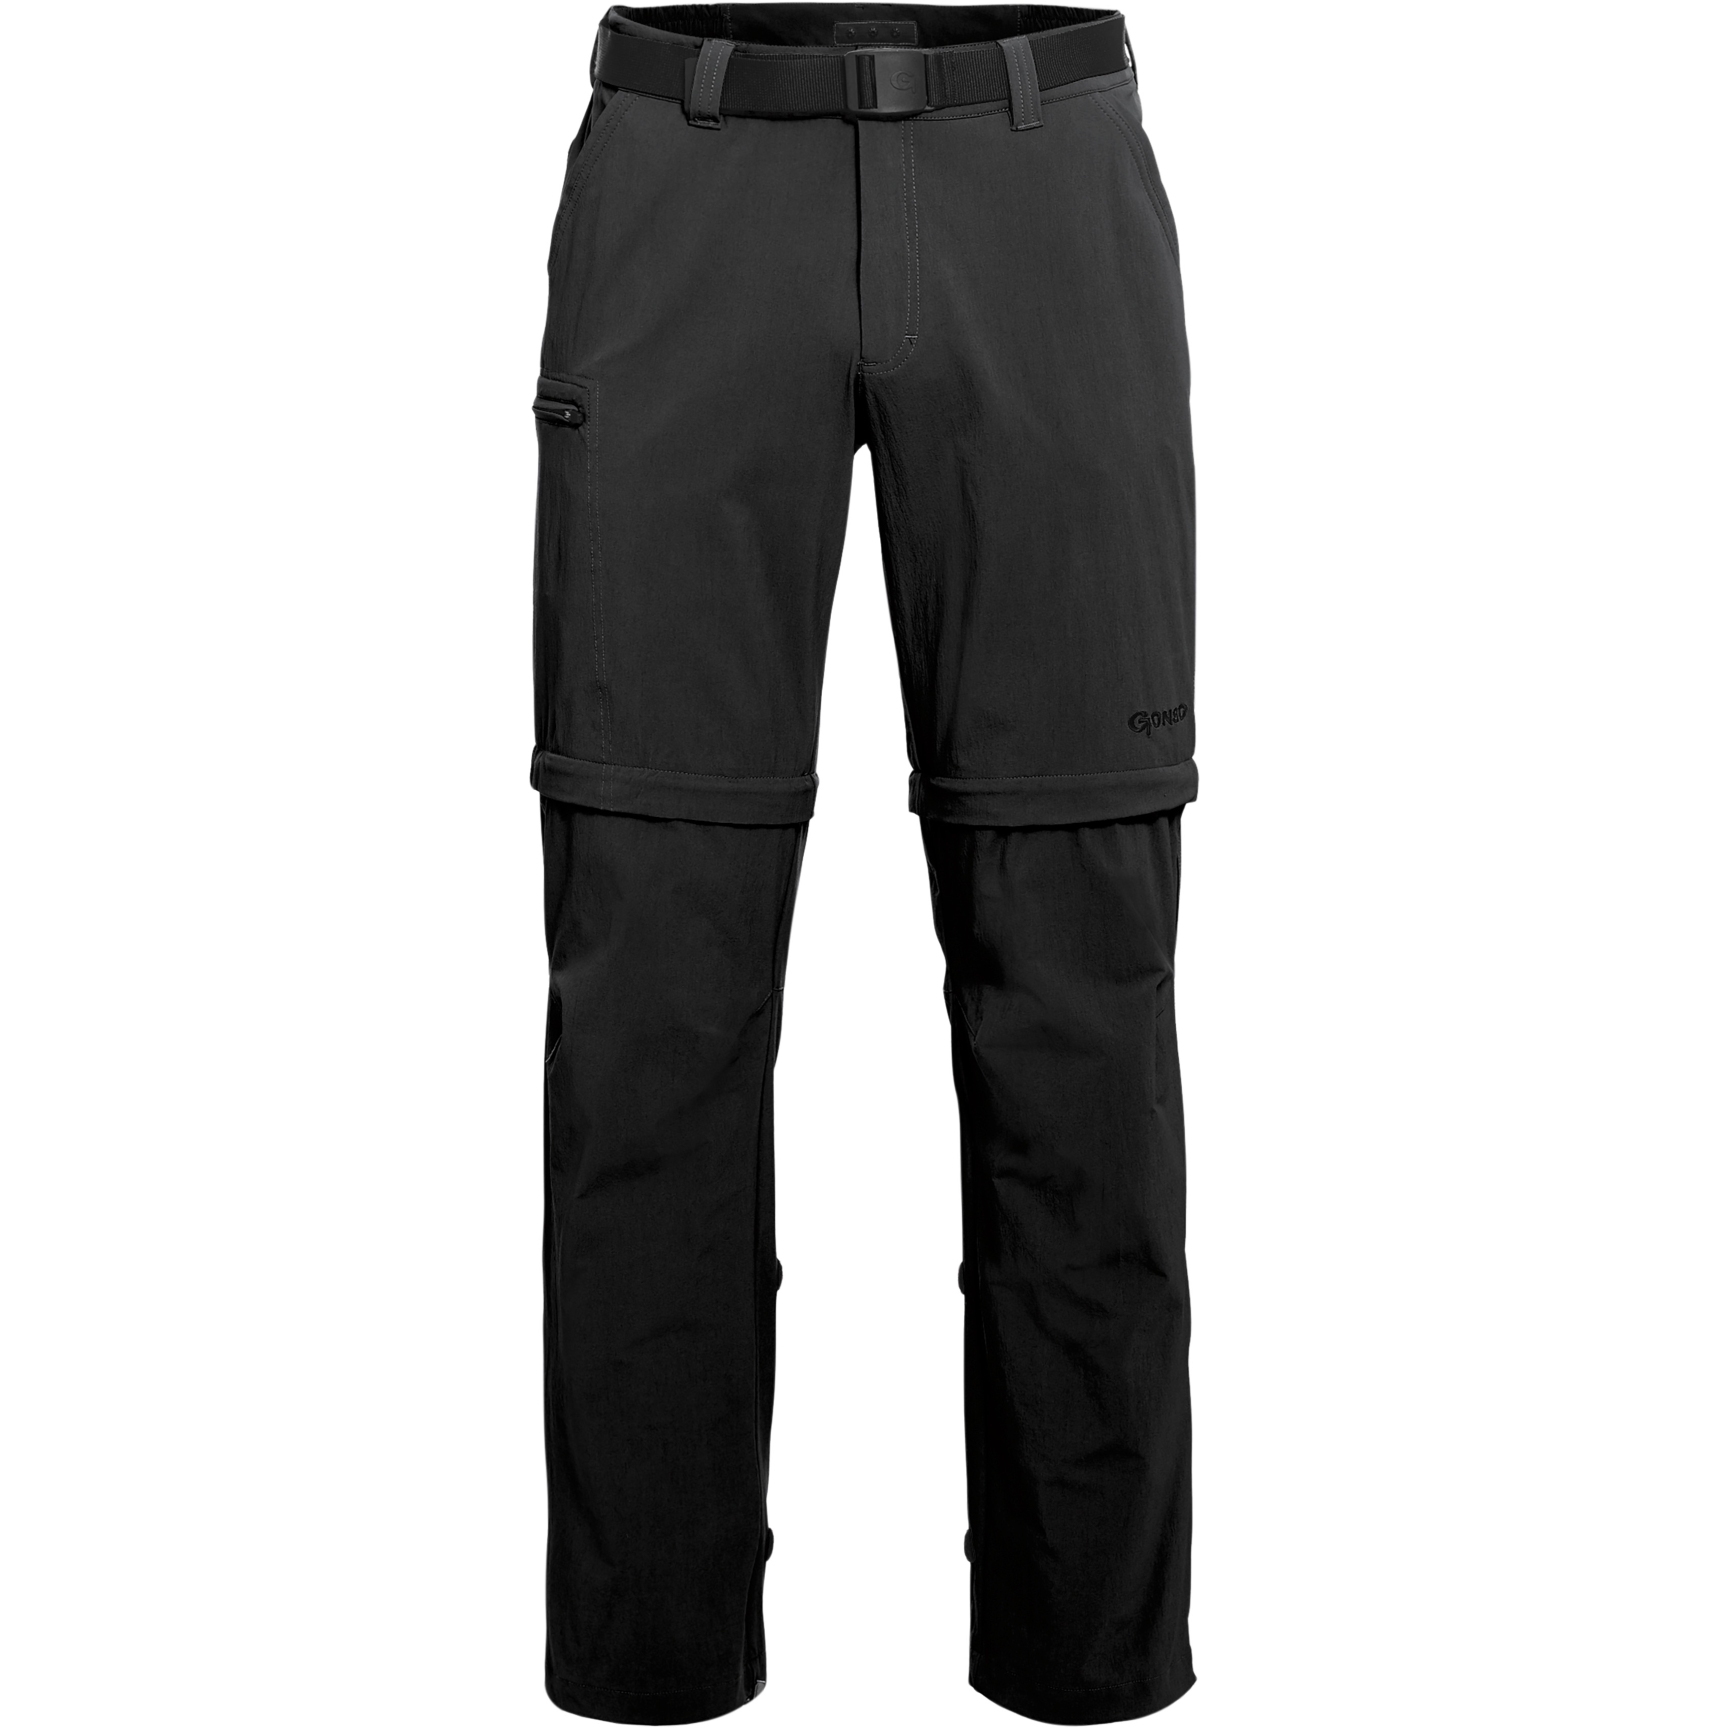 Image of Gonso Portland Men's Zip-Off Pants - Long - Black